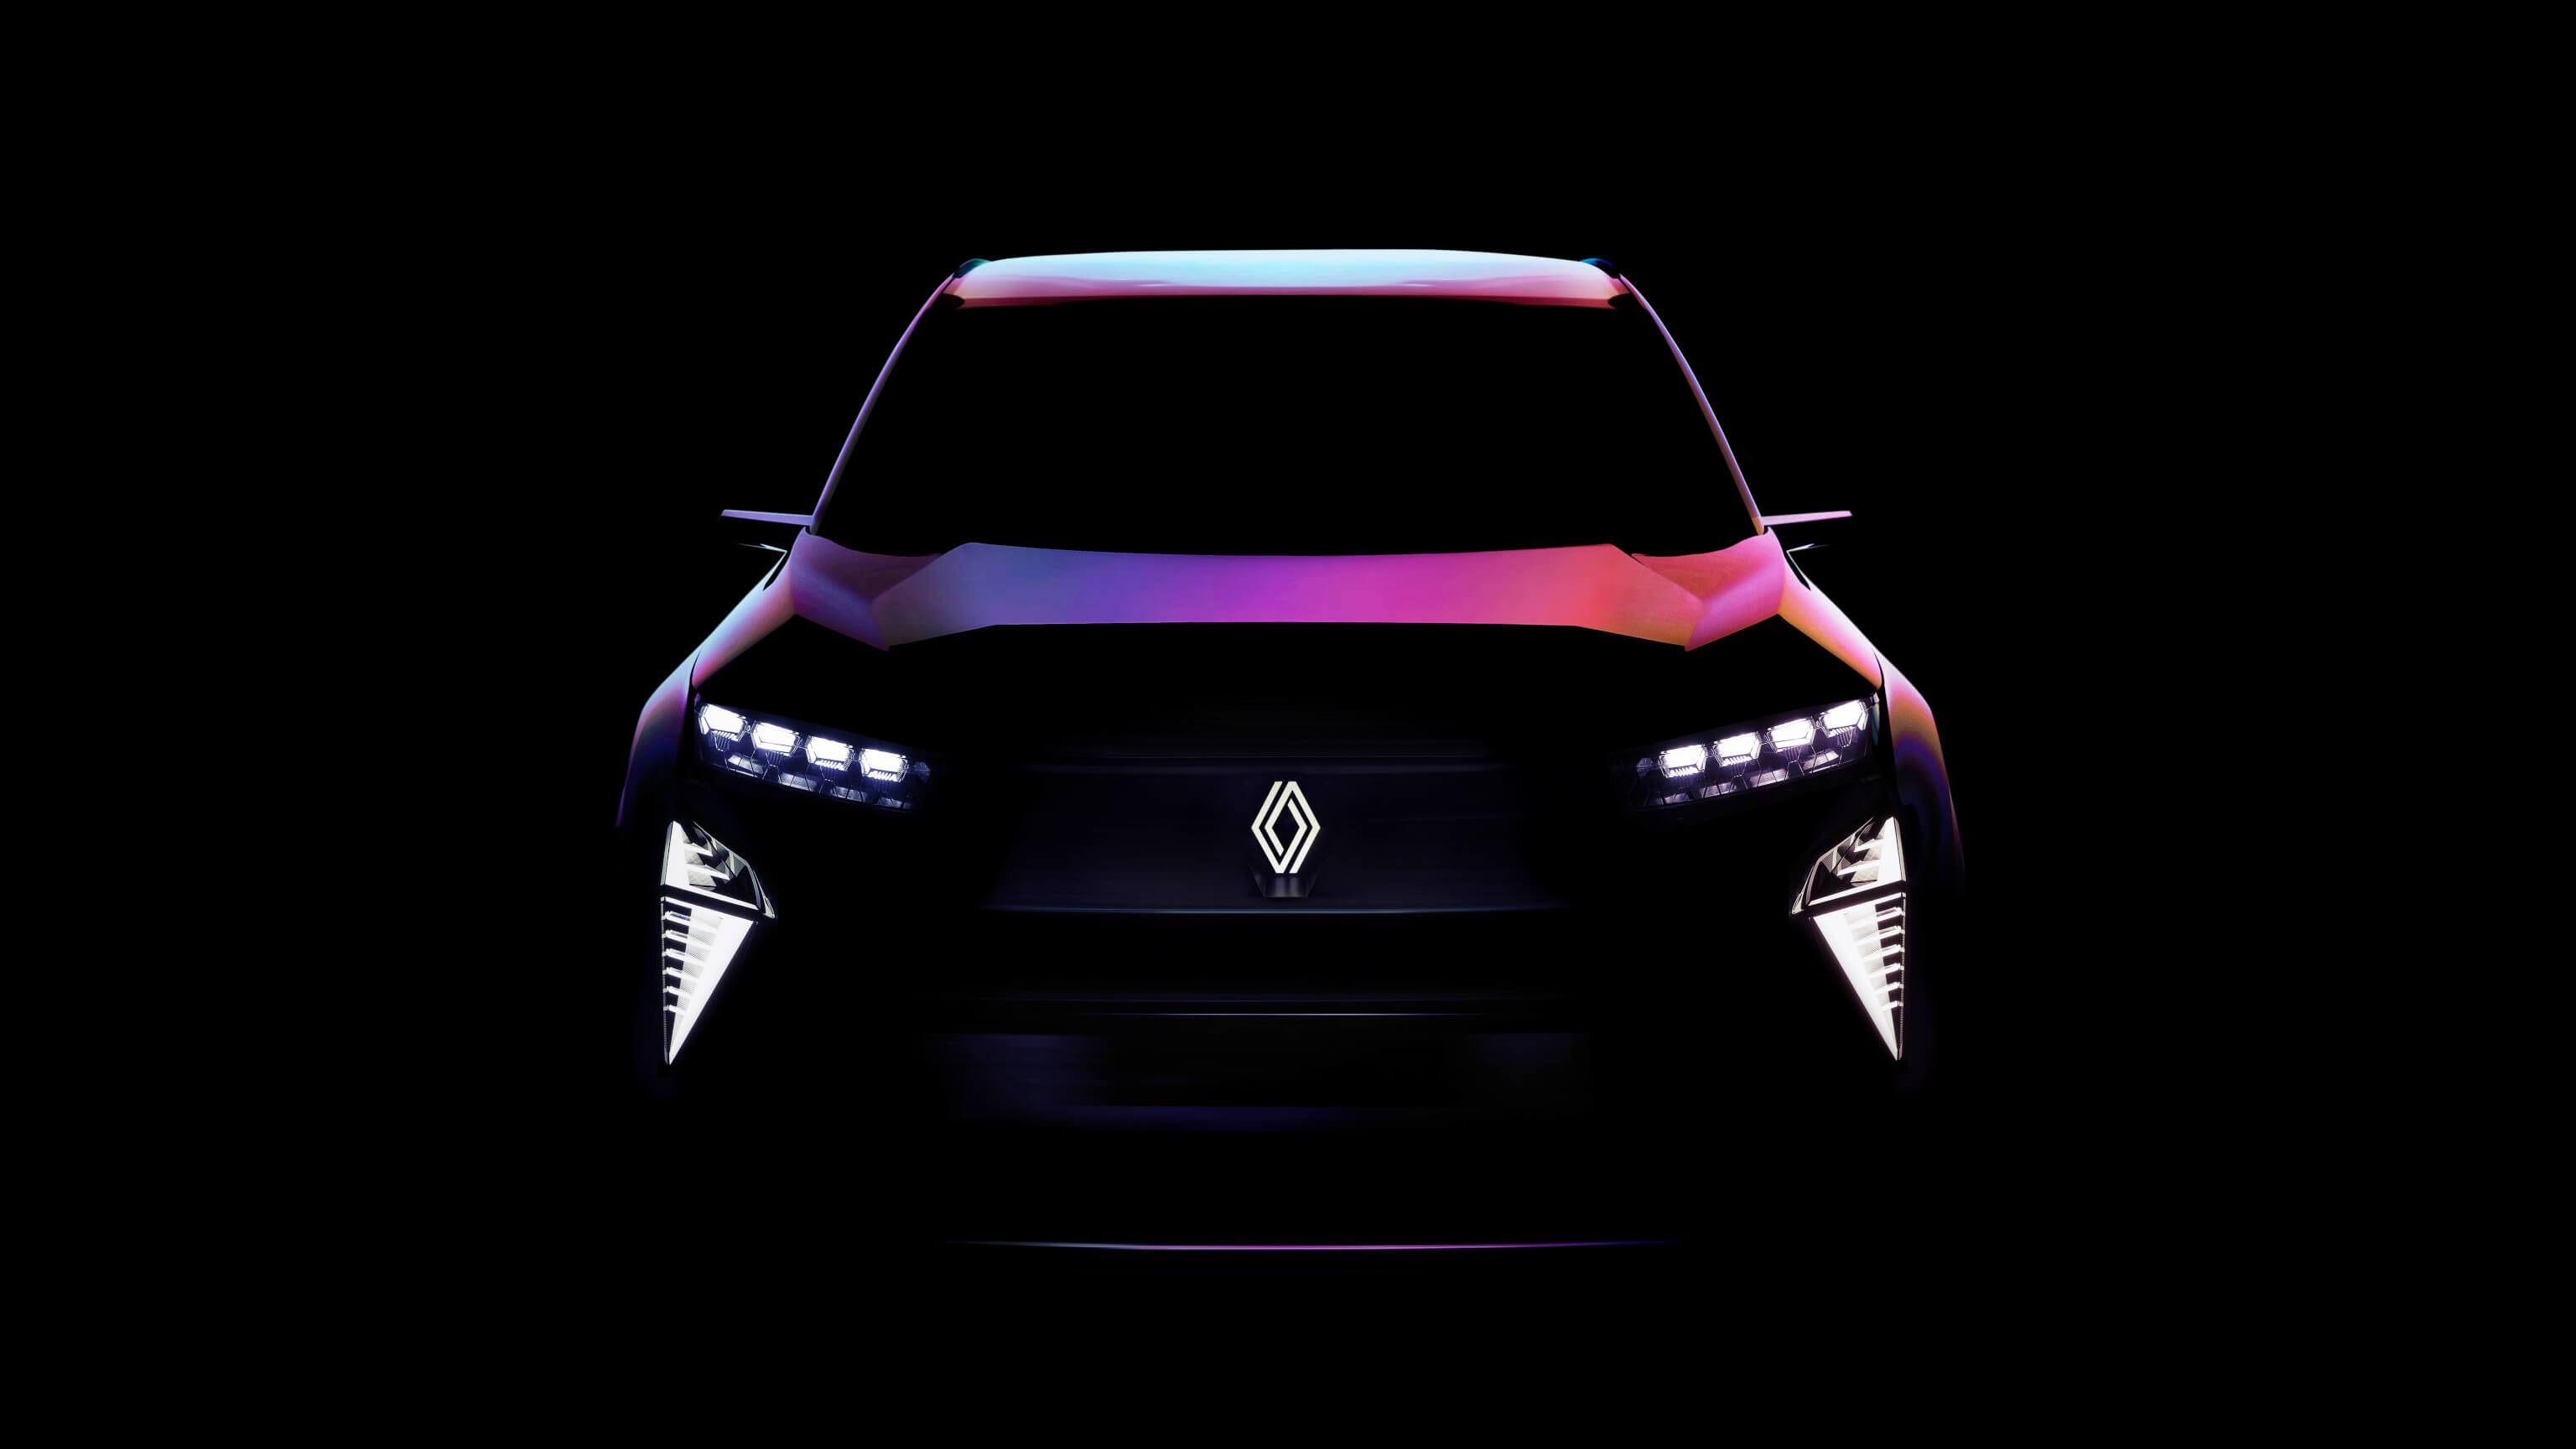 Zukünftiges Renault Konzeptfahrzeug